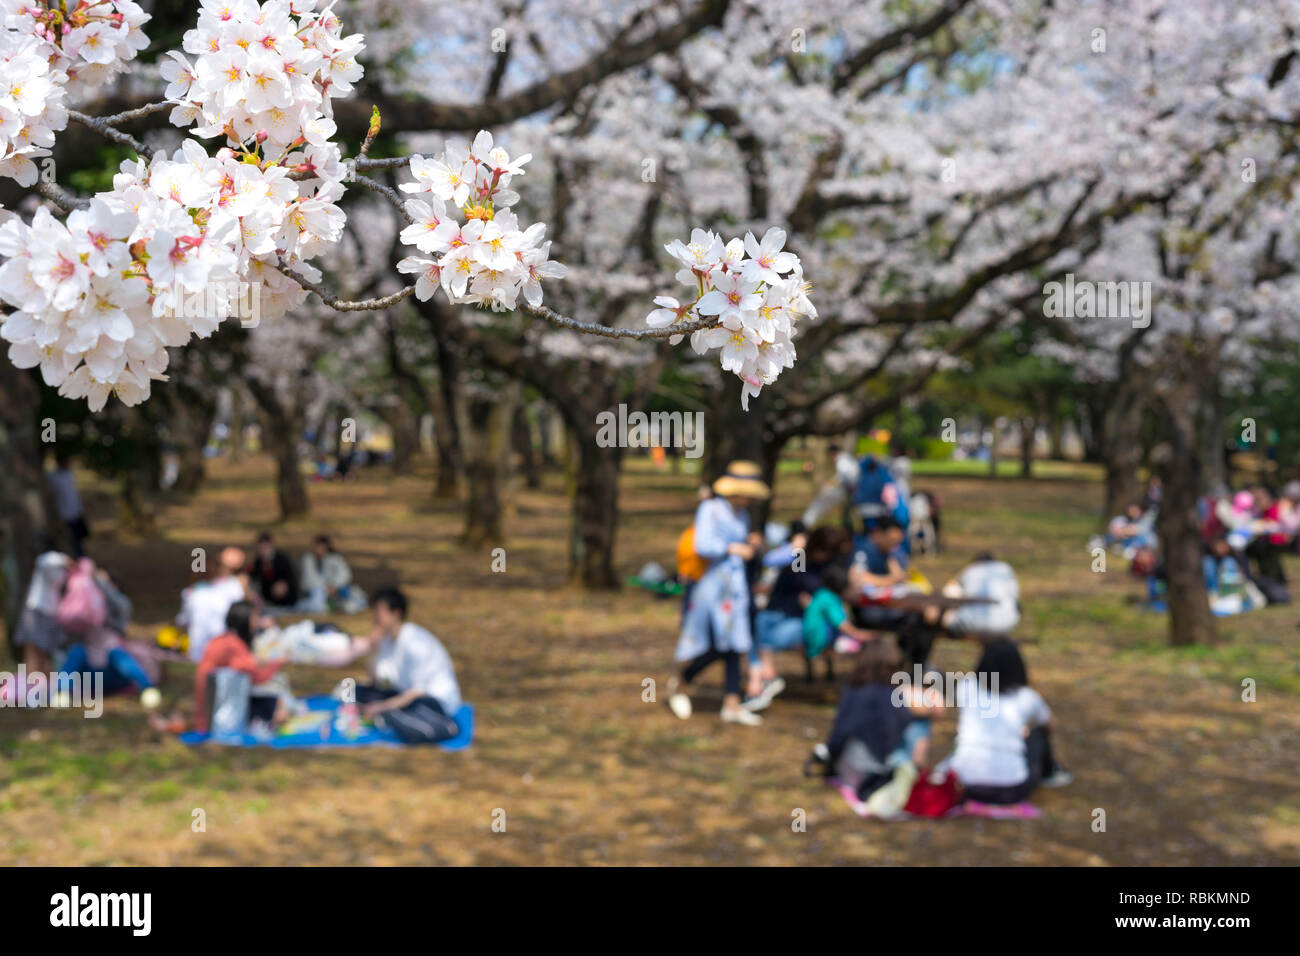 Yoyogi Park( Yoyogi kōen) is a park in Shibuya,Tokyo, Japan.Yoyogi Park is popular for Cherry Blossom viewing and picnics. Stock Photo